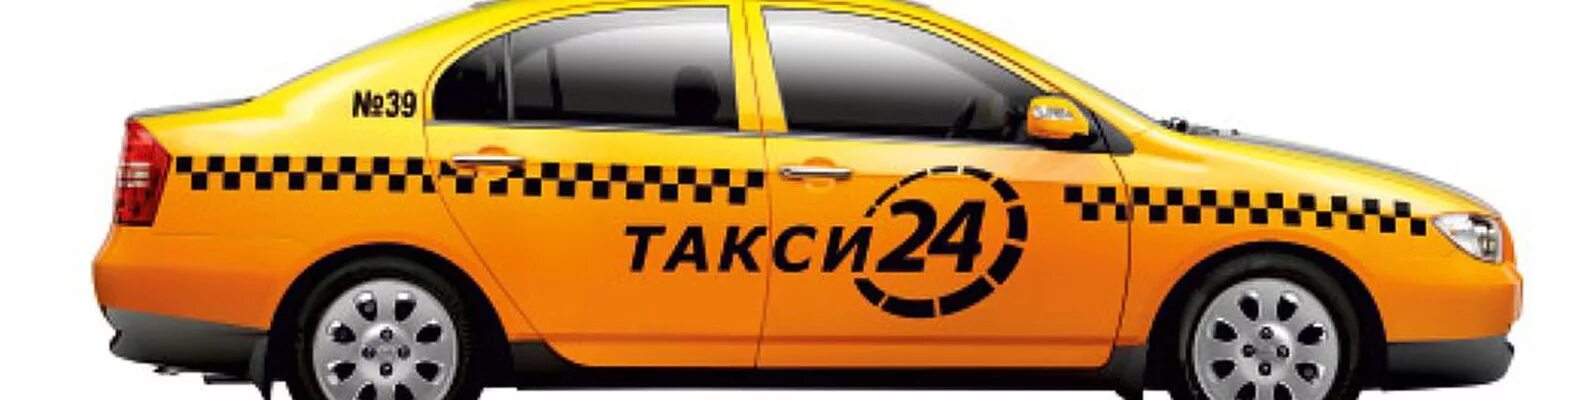 Такси буда кошелево. Машина "такси". Такси картинки. Такси 24 24 24. Такси в городе.